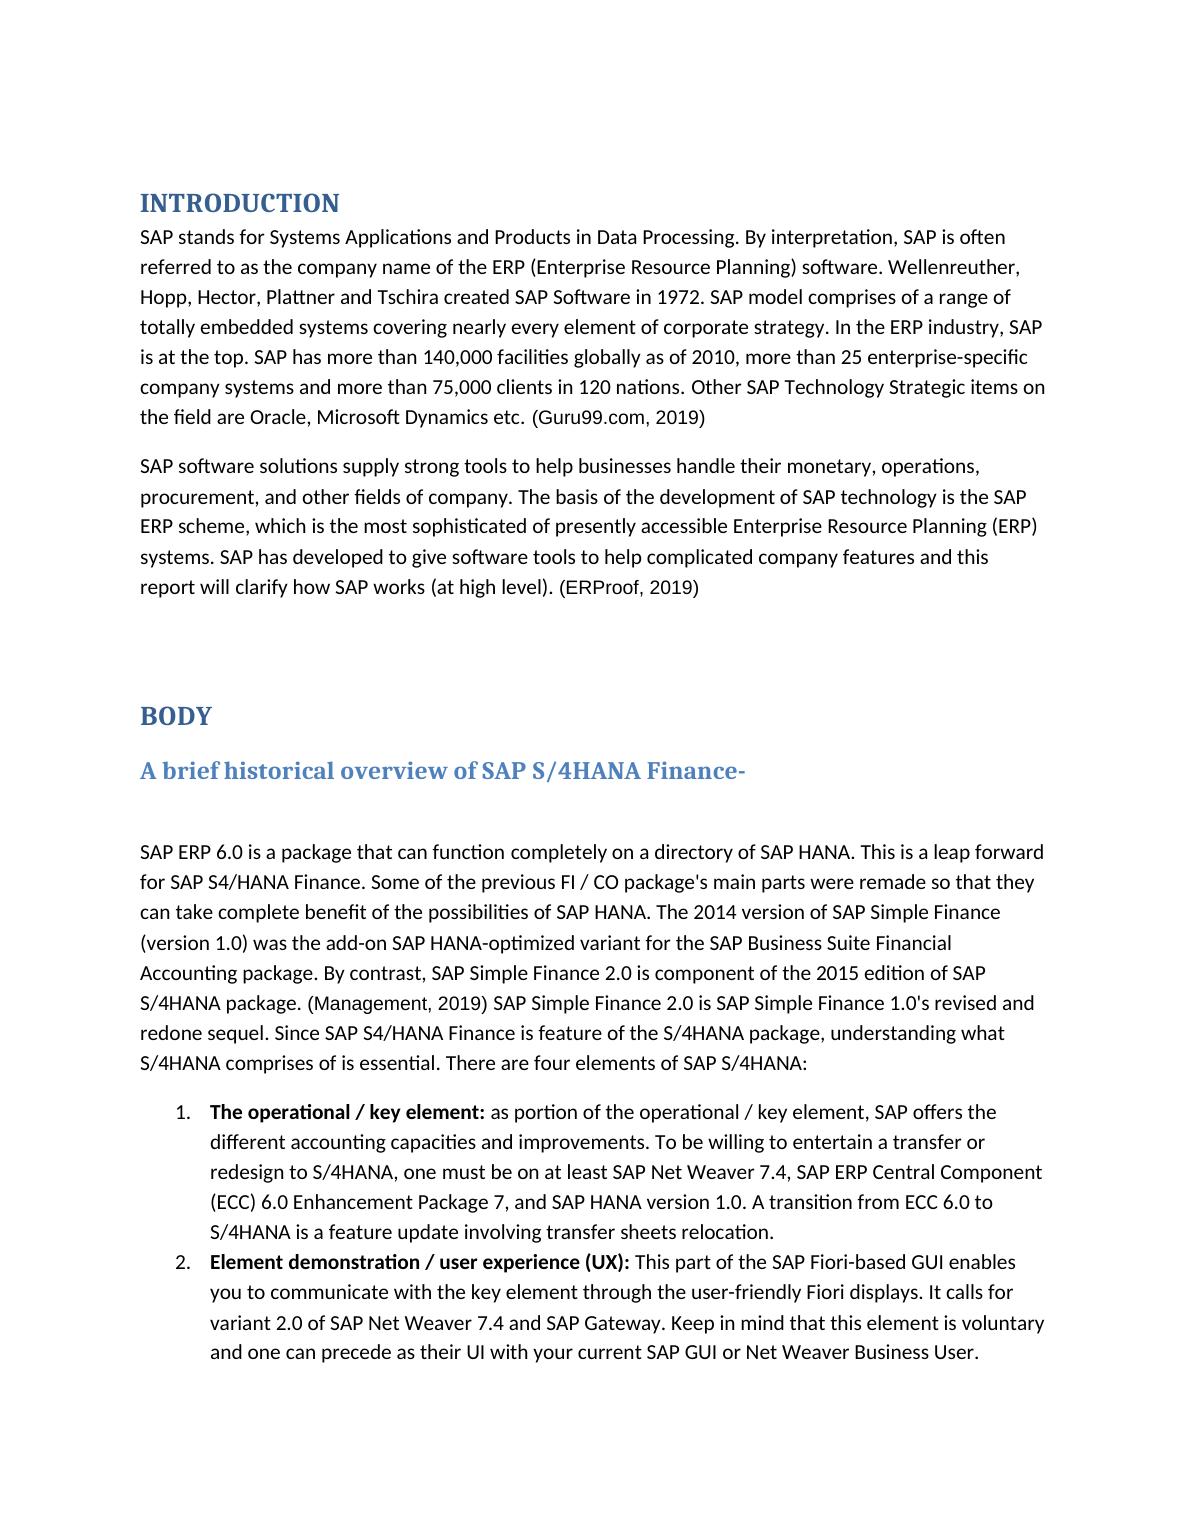 SAP S/4 HANA Finance Overview and Benefits_3